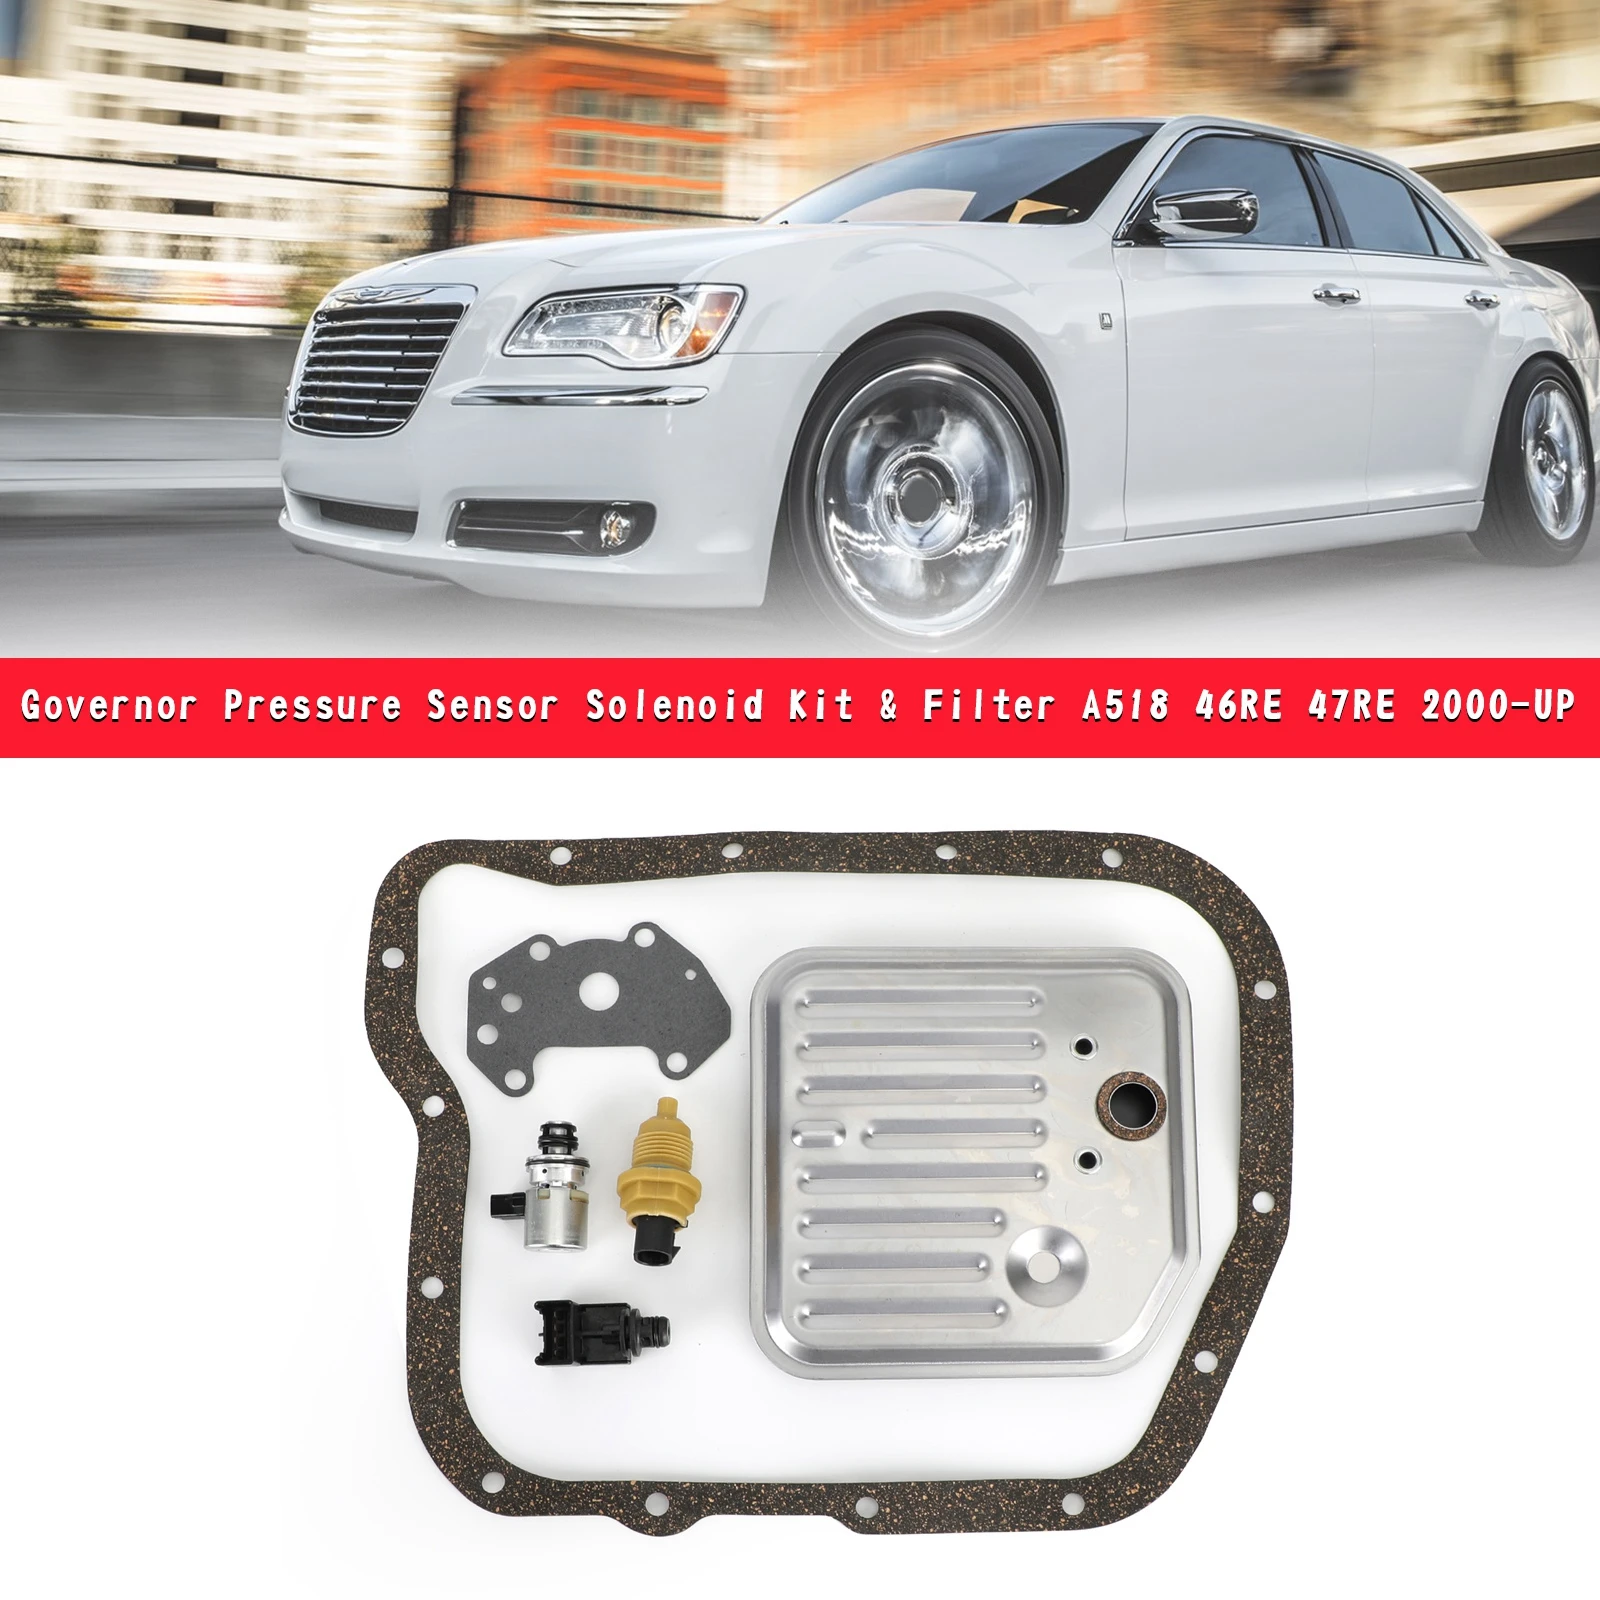 

Areyourshop Governor Pressure Sensor Solenoid Kit & Filter A518 46RE 47RE 2000-UP for Chrysler Car Auto Parts